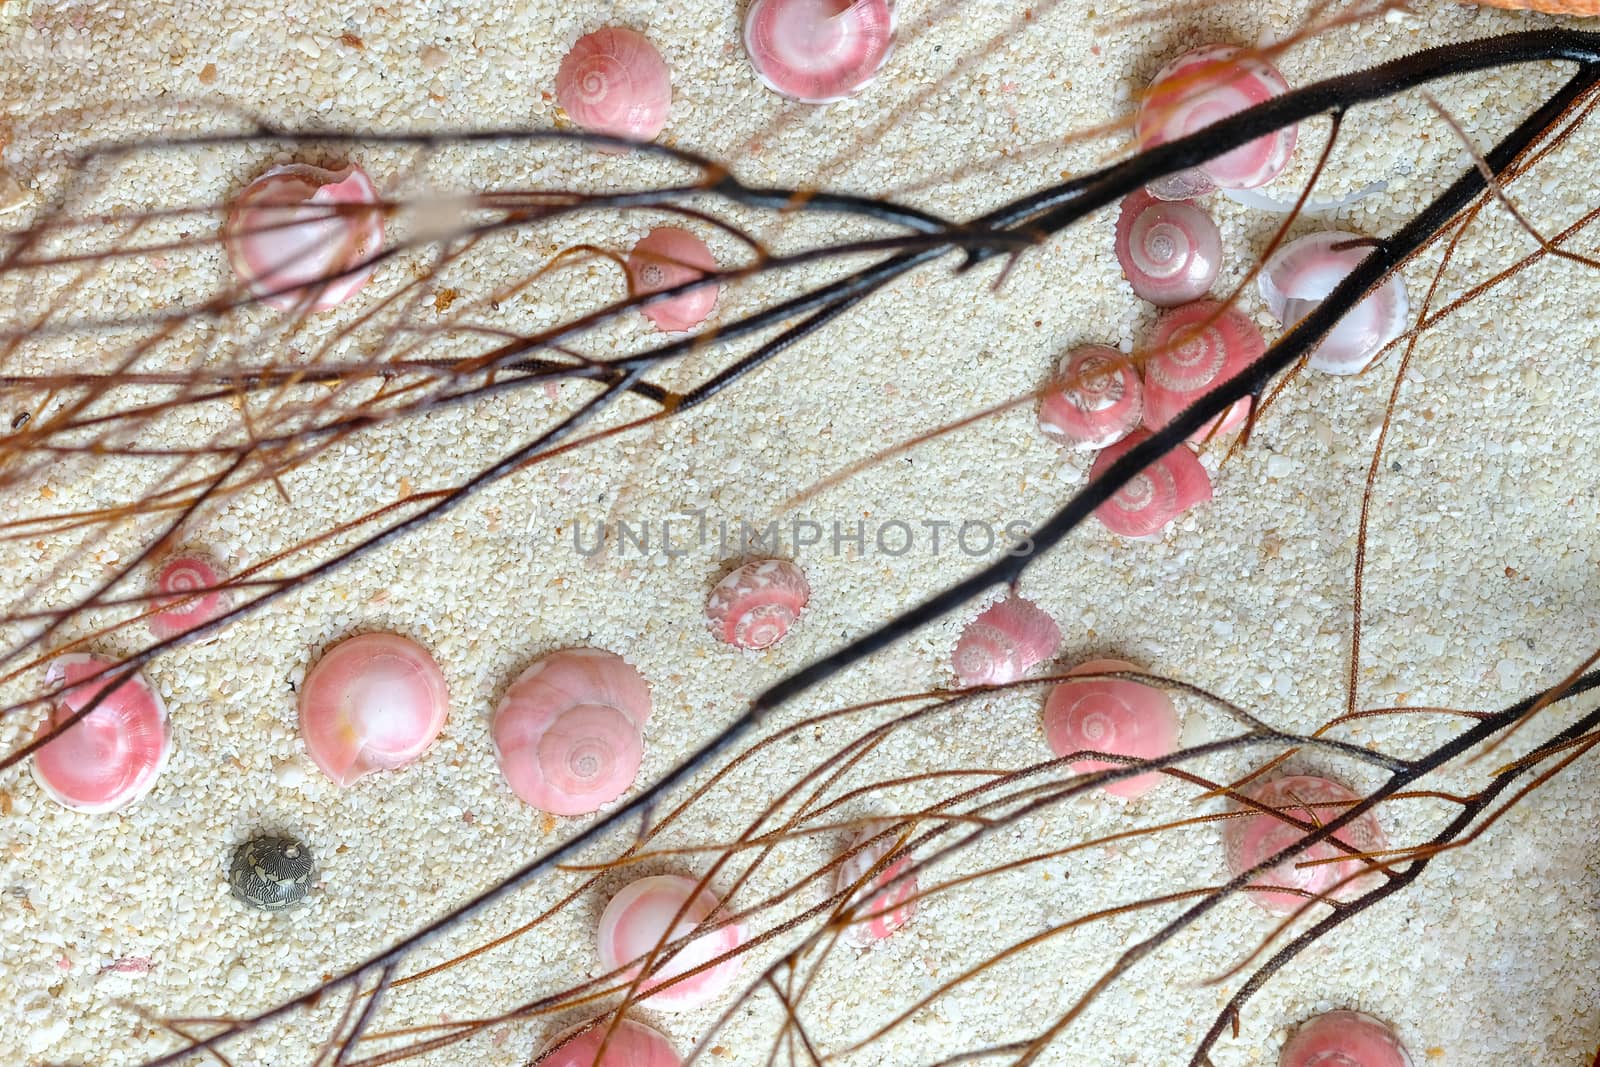 shells of pink button snails (Umbonium vestiarum) on the sand